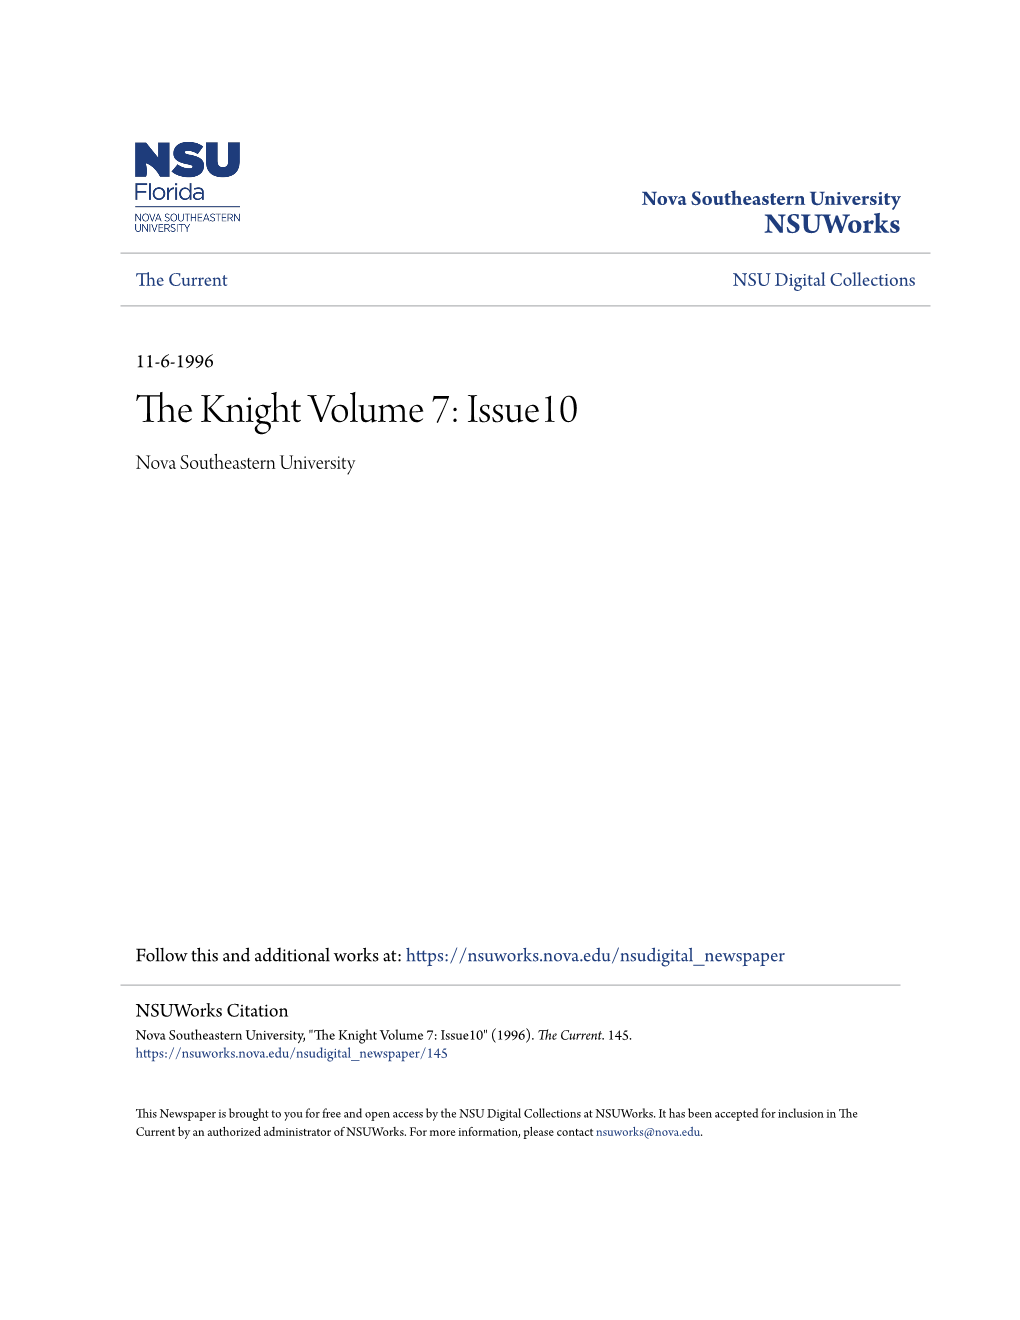 The Knight Volume 7: Issue10 Nova Southeastern University